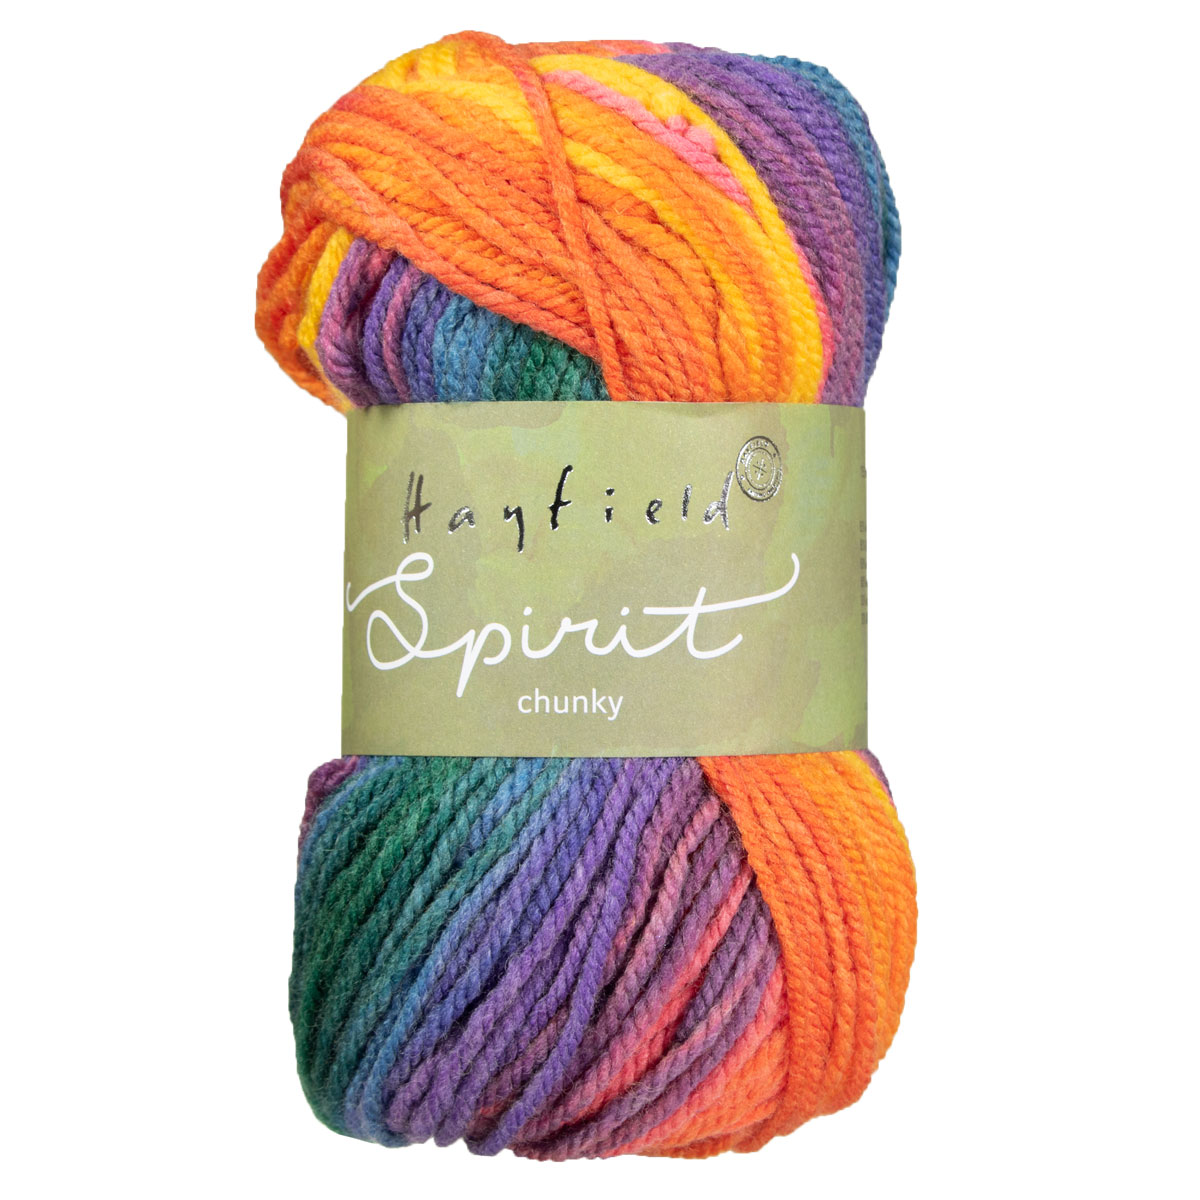 Hayfield Spirit Chunky Yarn at Jimmy Beans Wool